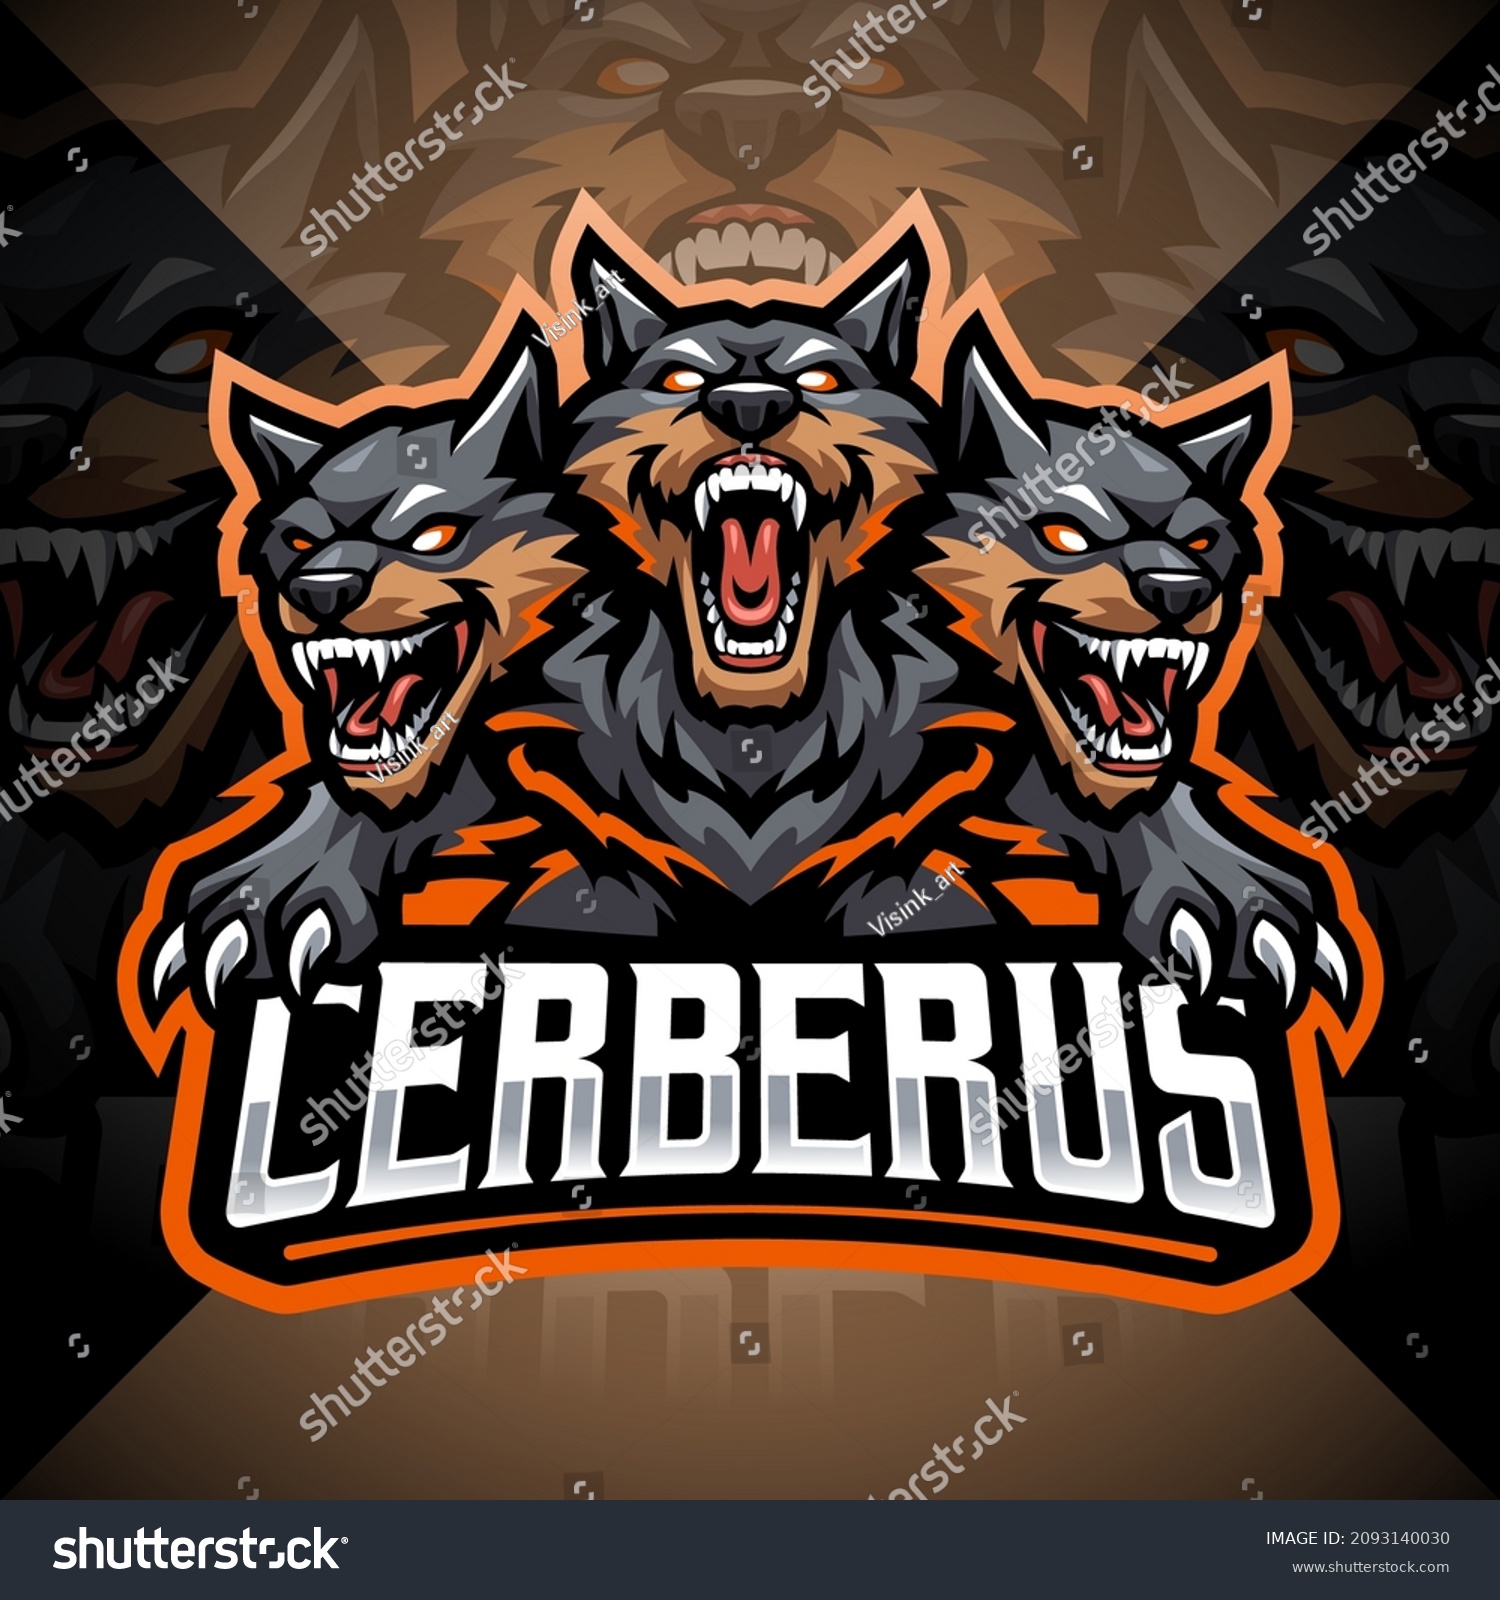 SVG of Cerberus esport mascot logo design svg